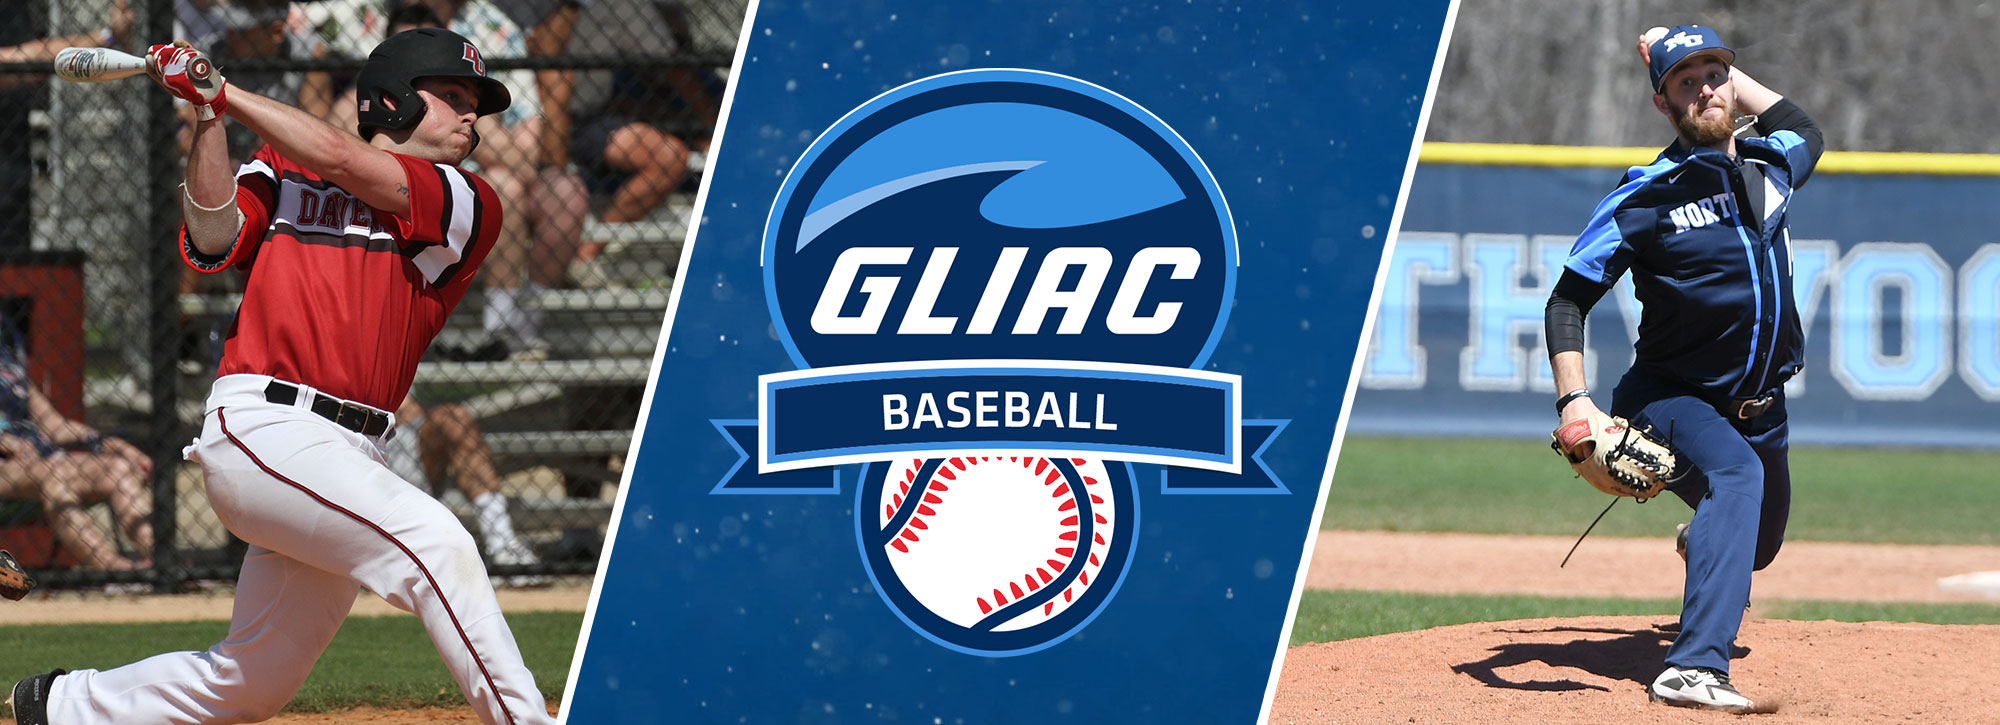 2018 All-GLIAC Baseball Teams & Postseason Awards Announced